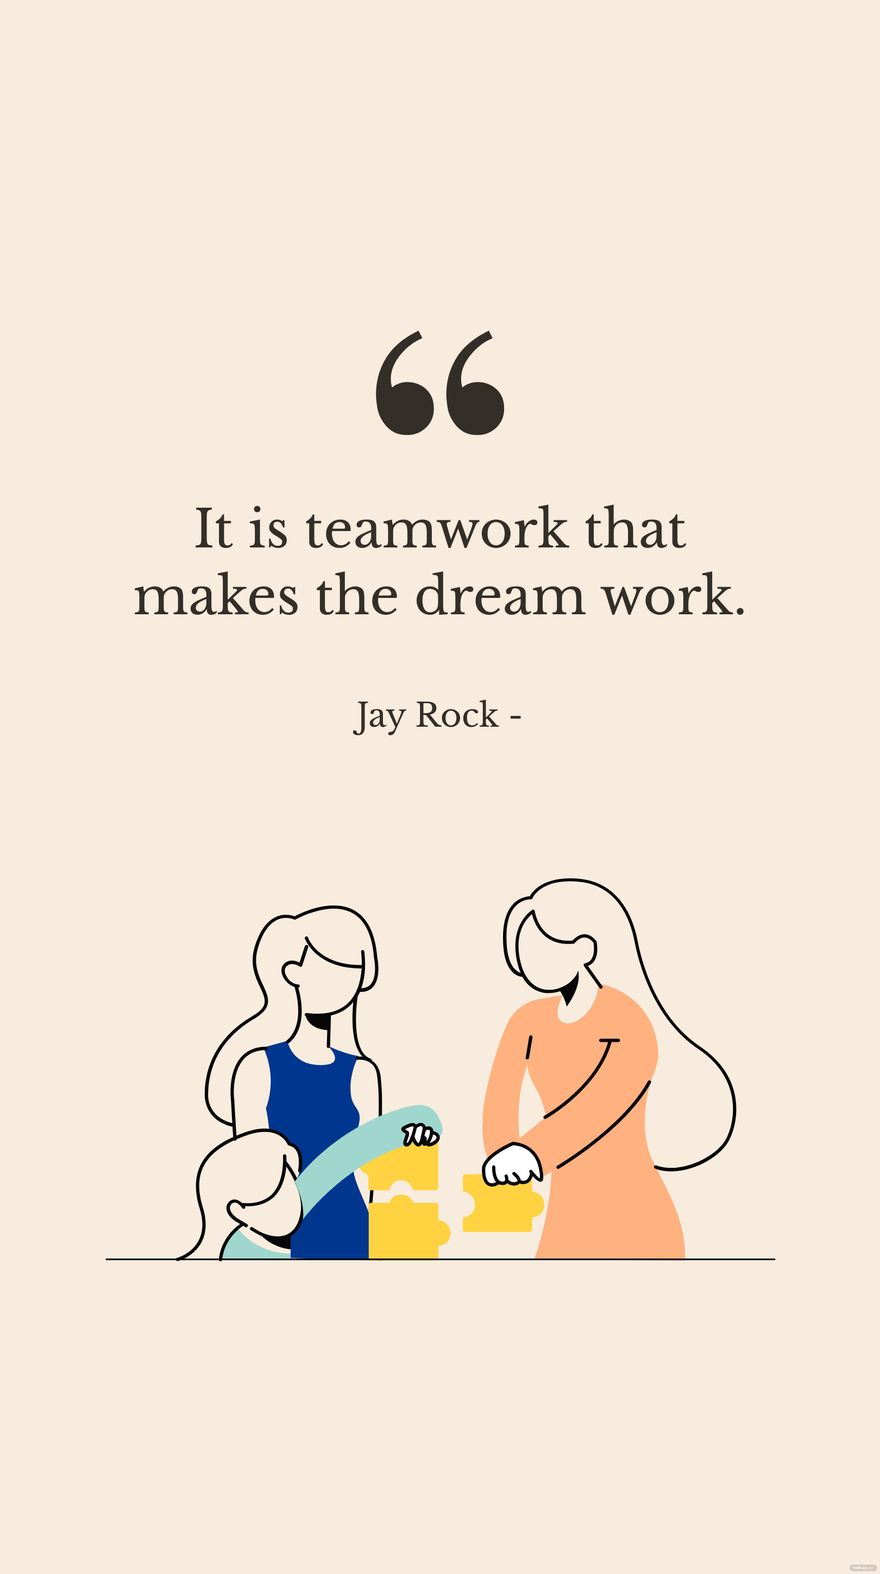 Free Jay Rock - It is teamwork that makes the dream work. in JPG